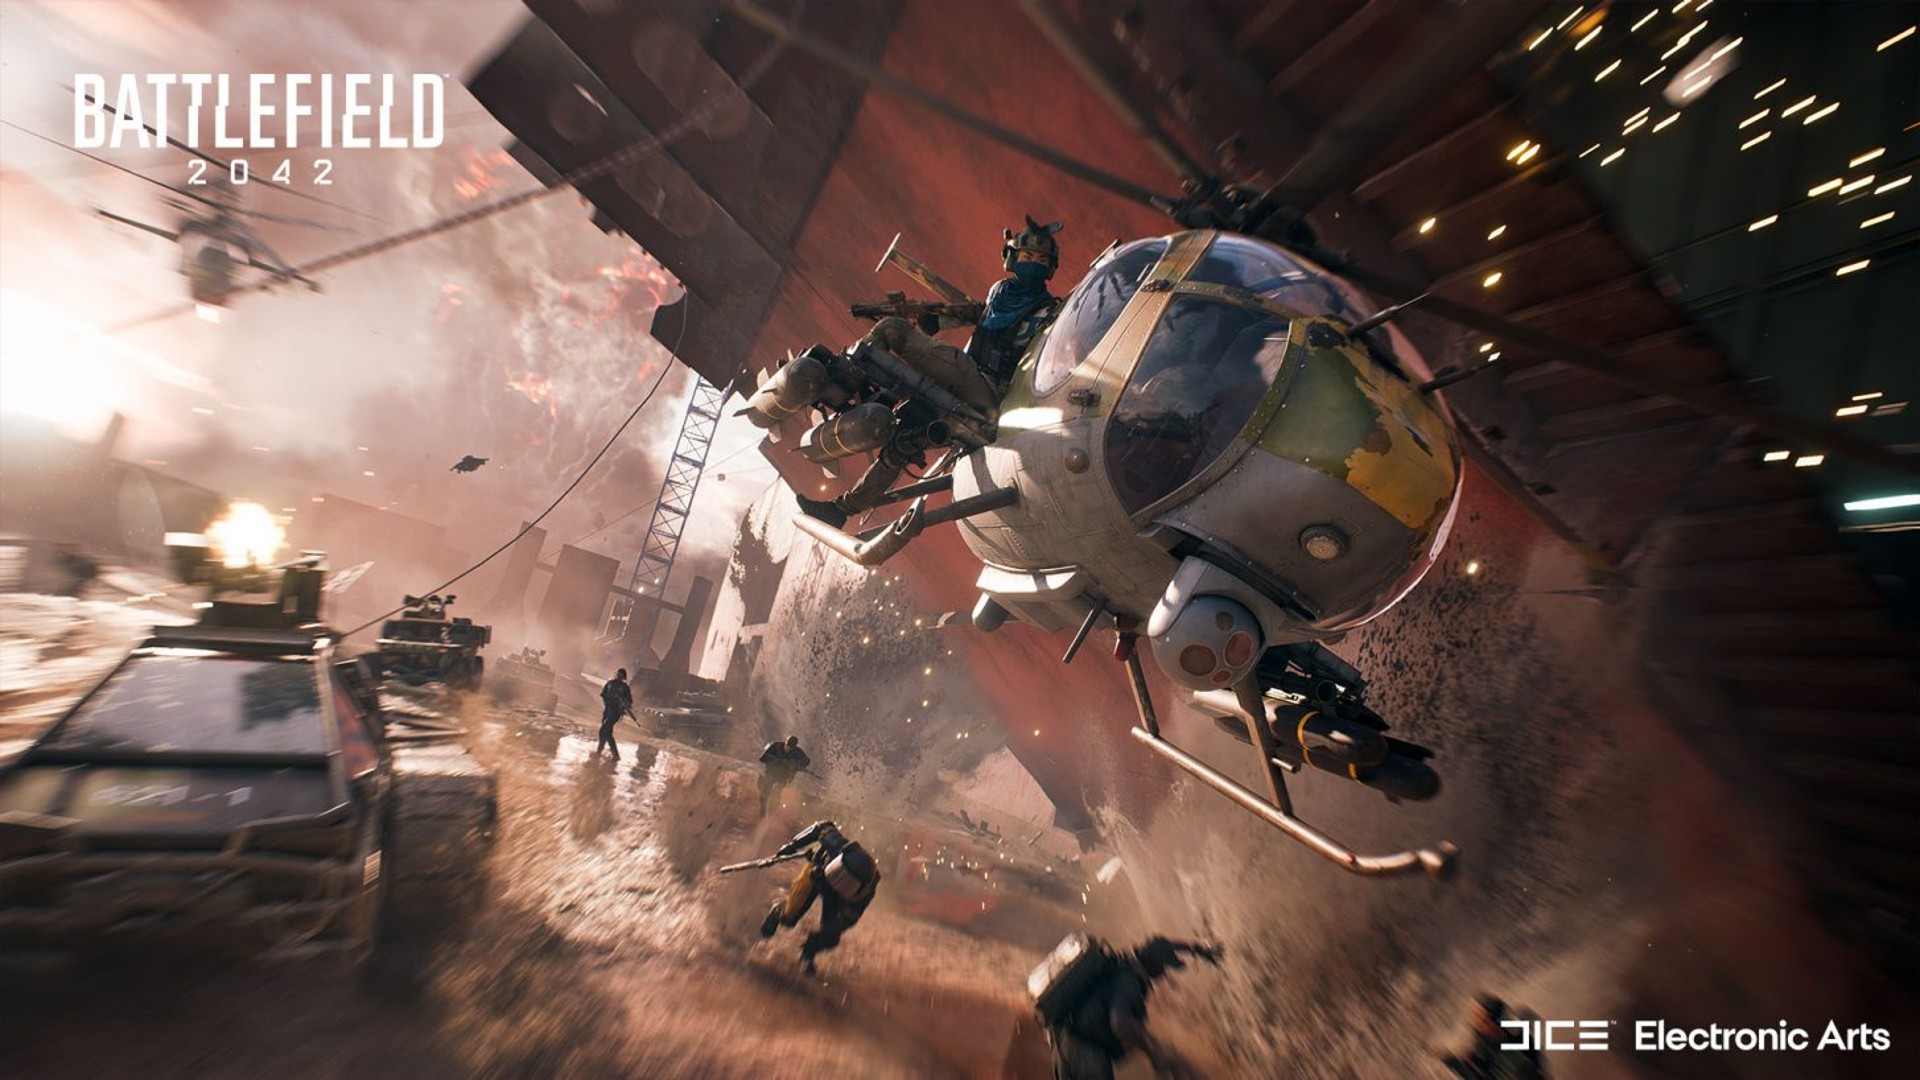 CEO ของ EA อยากให้ ‘Call of Duty’ เป็นเกมเอ็กซ์คลูซีฟของ Xbox เพื่อเปิดทางให้ ‘Battlefield’ ขยายฐานผู้เล่น